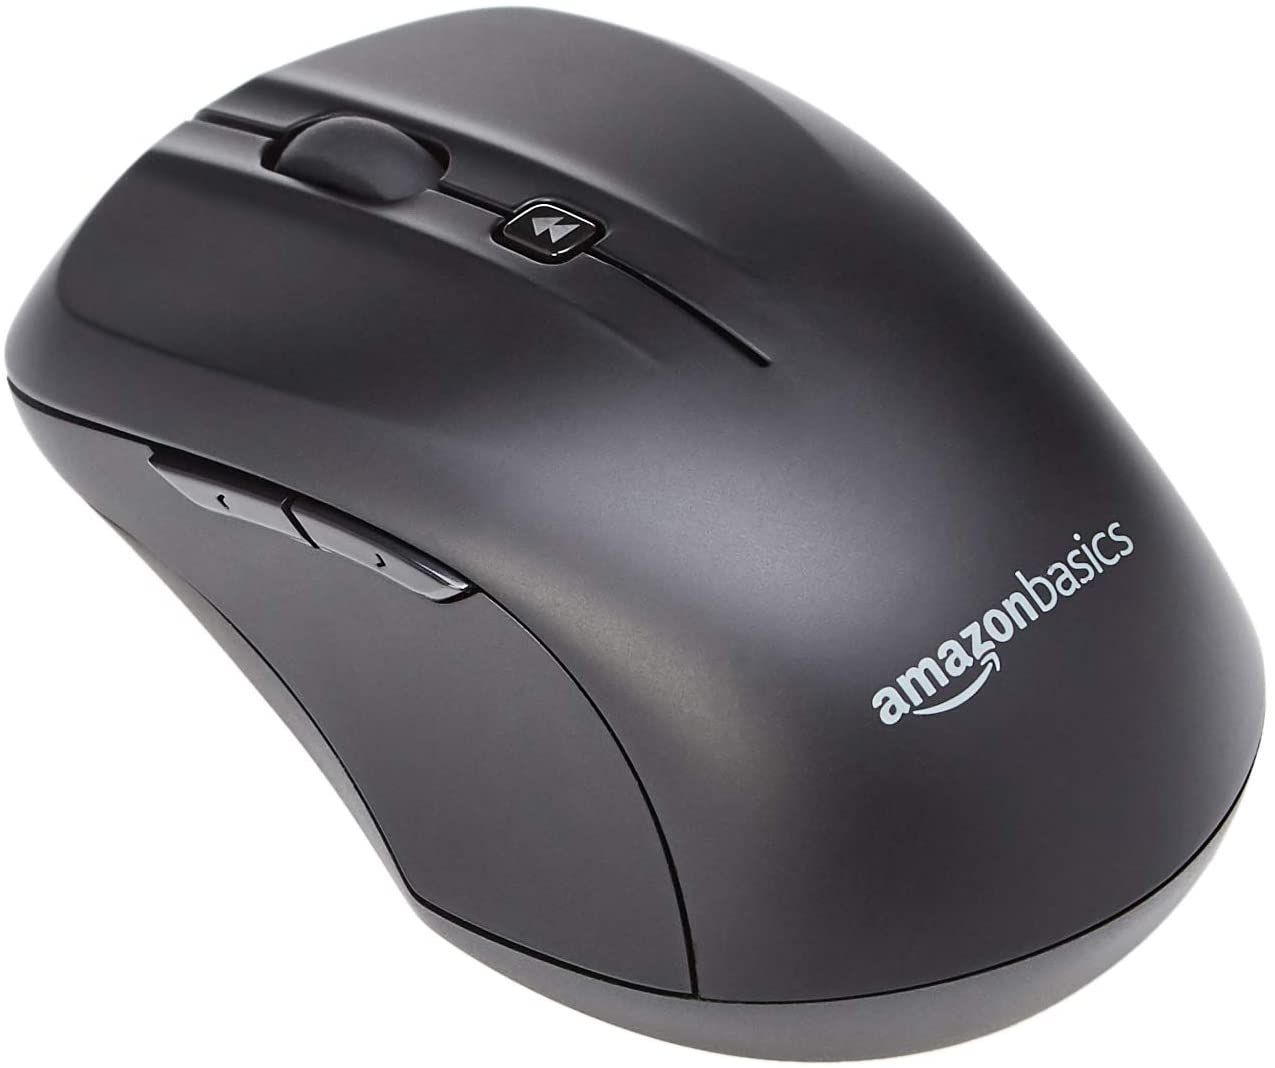 Amazon Basics Wireless Computer Mouse